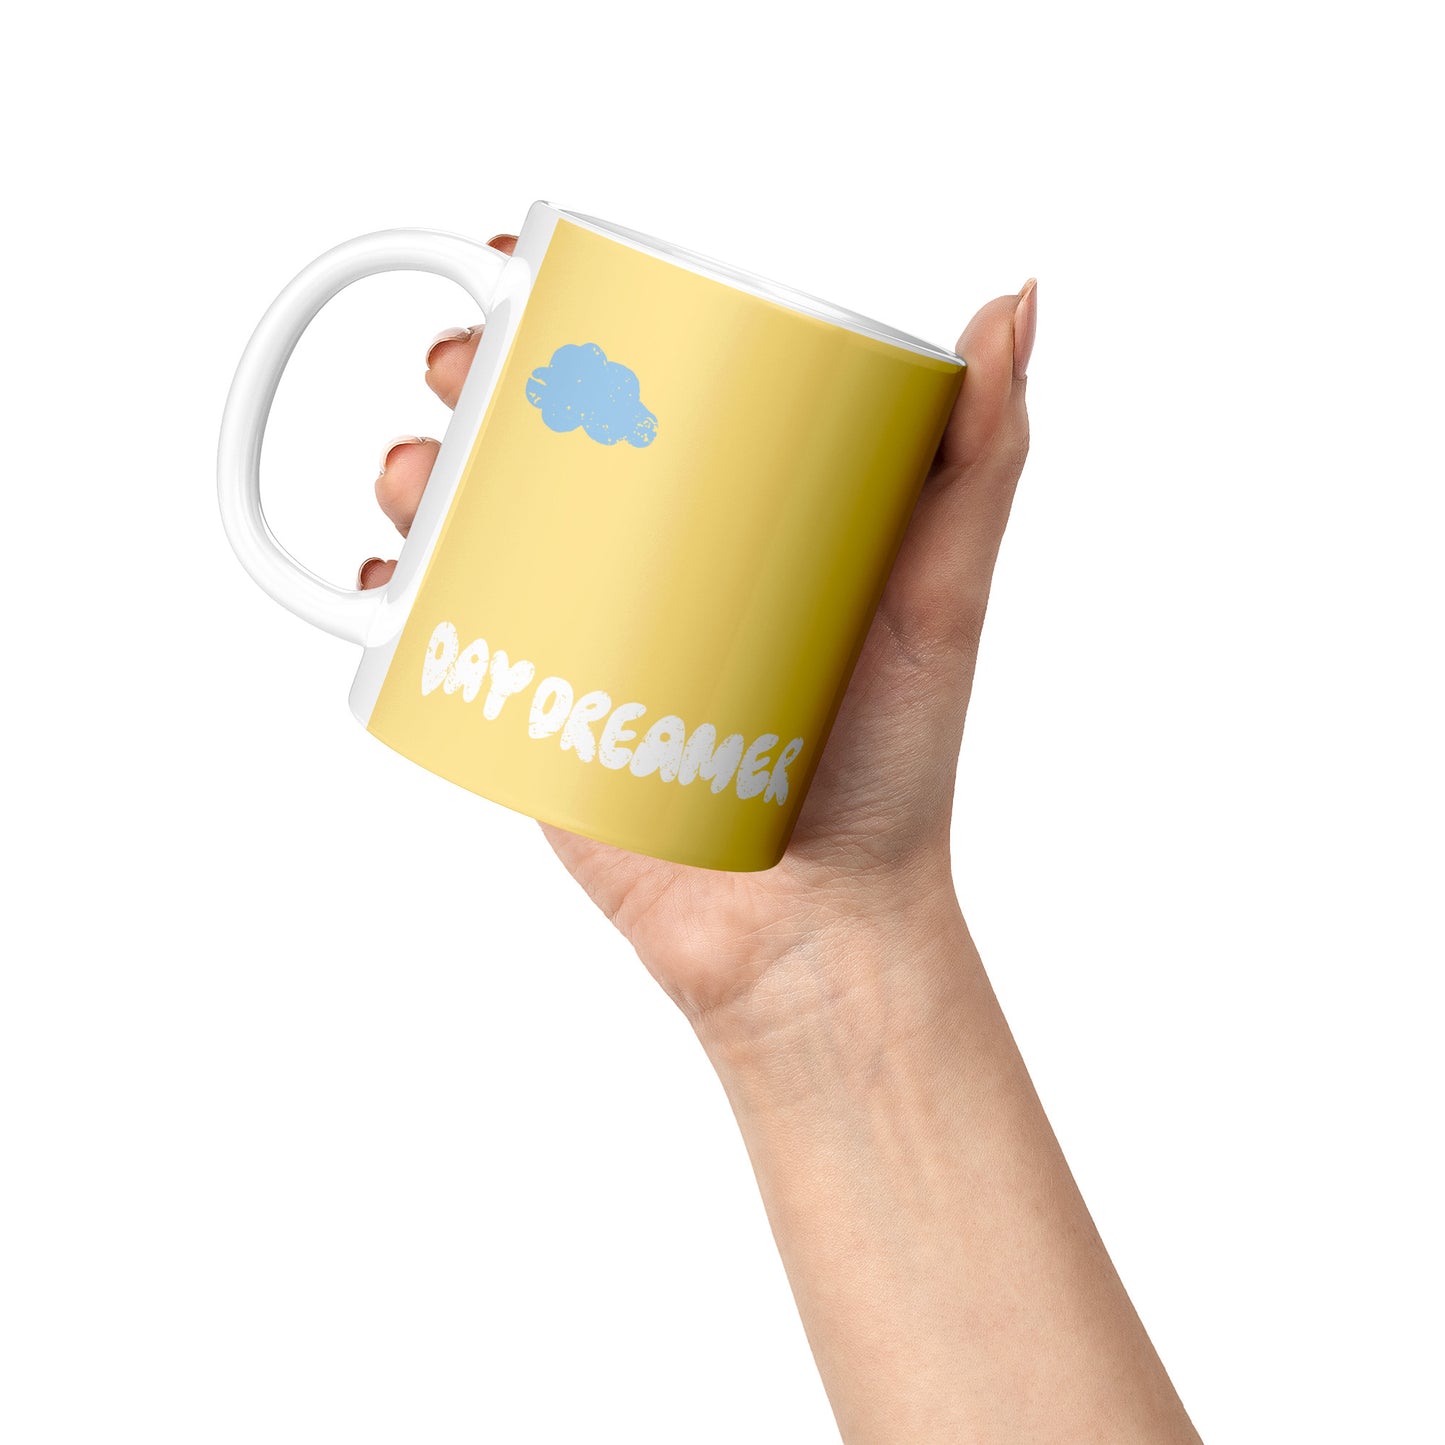 The Day Dreamer Mug in Yellow